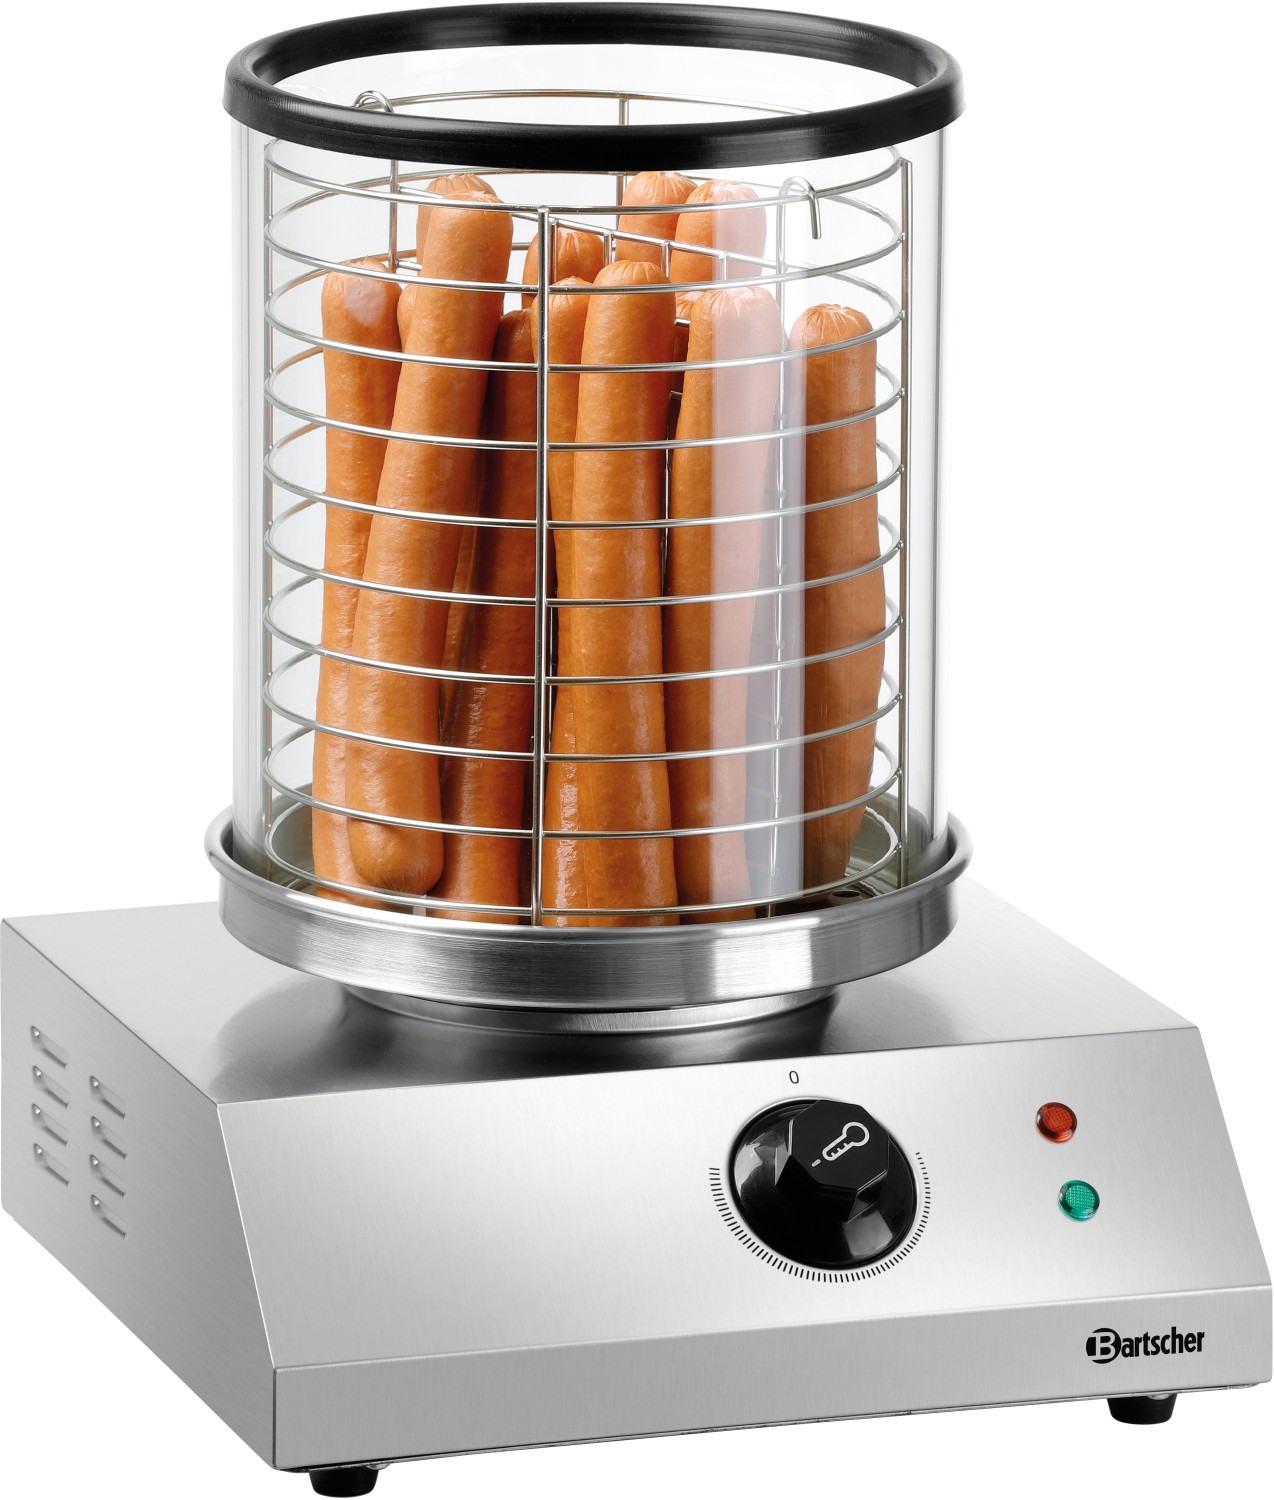  Bartscher Protection d’appareil hot-dogs 200 